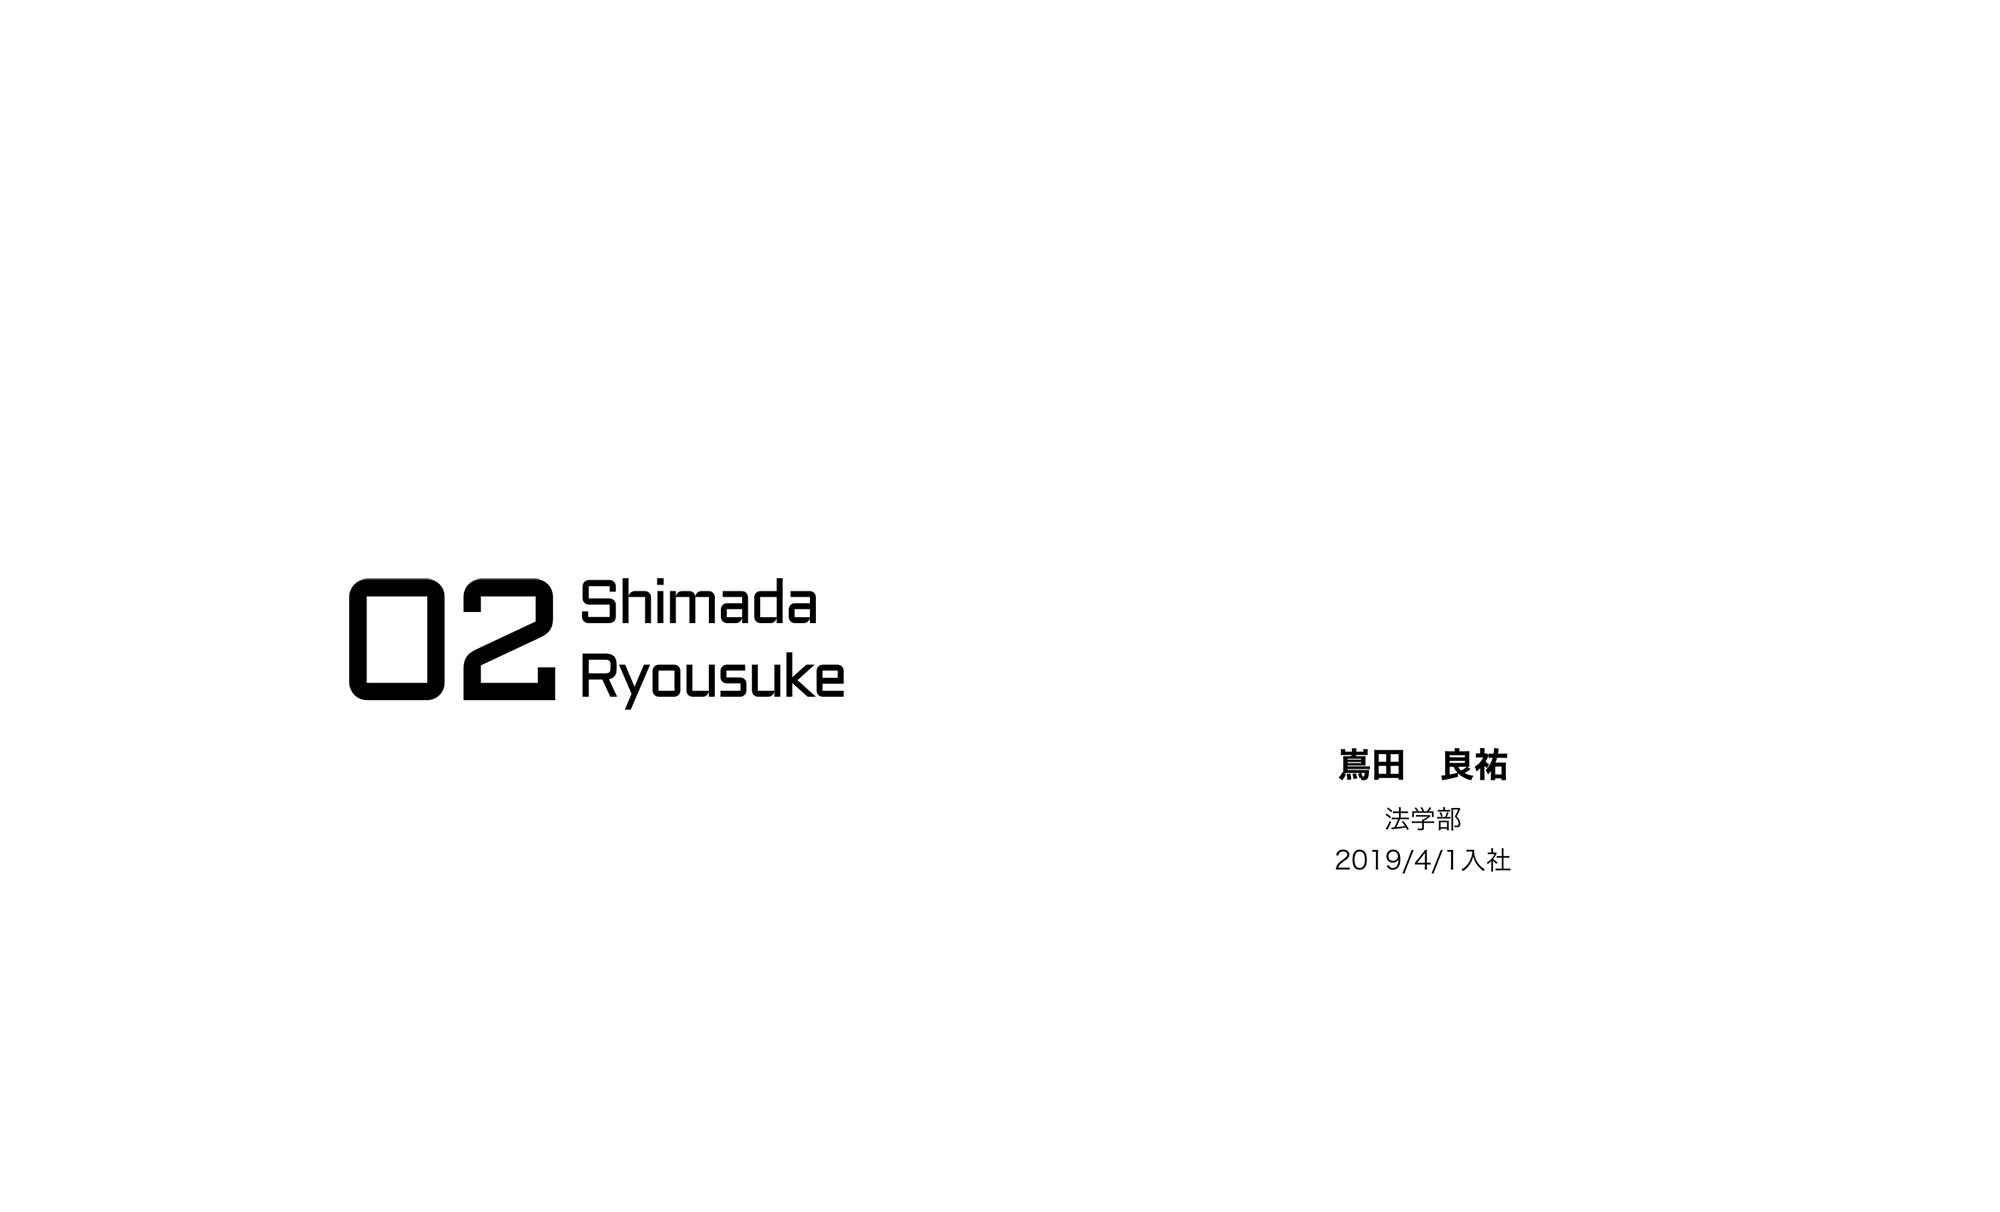 02 Shimada Ryousuke / 嶌田　良祐 / 法学部 / 2019/4/1入社